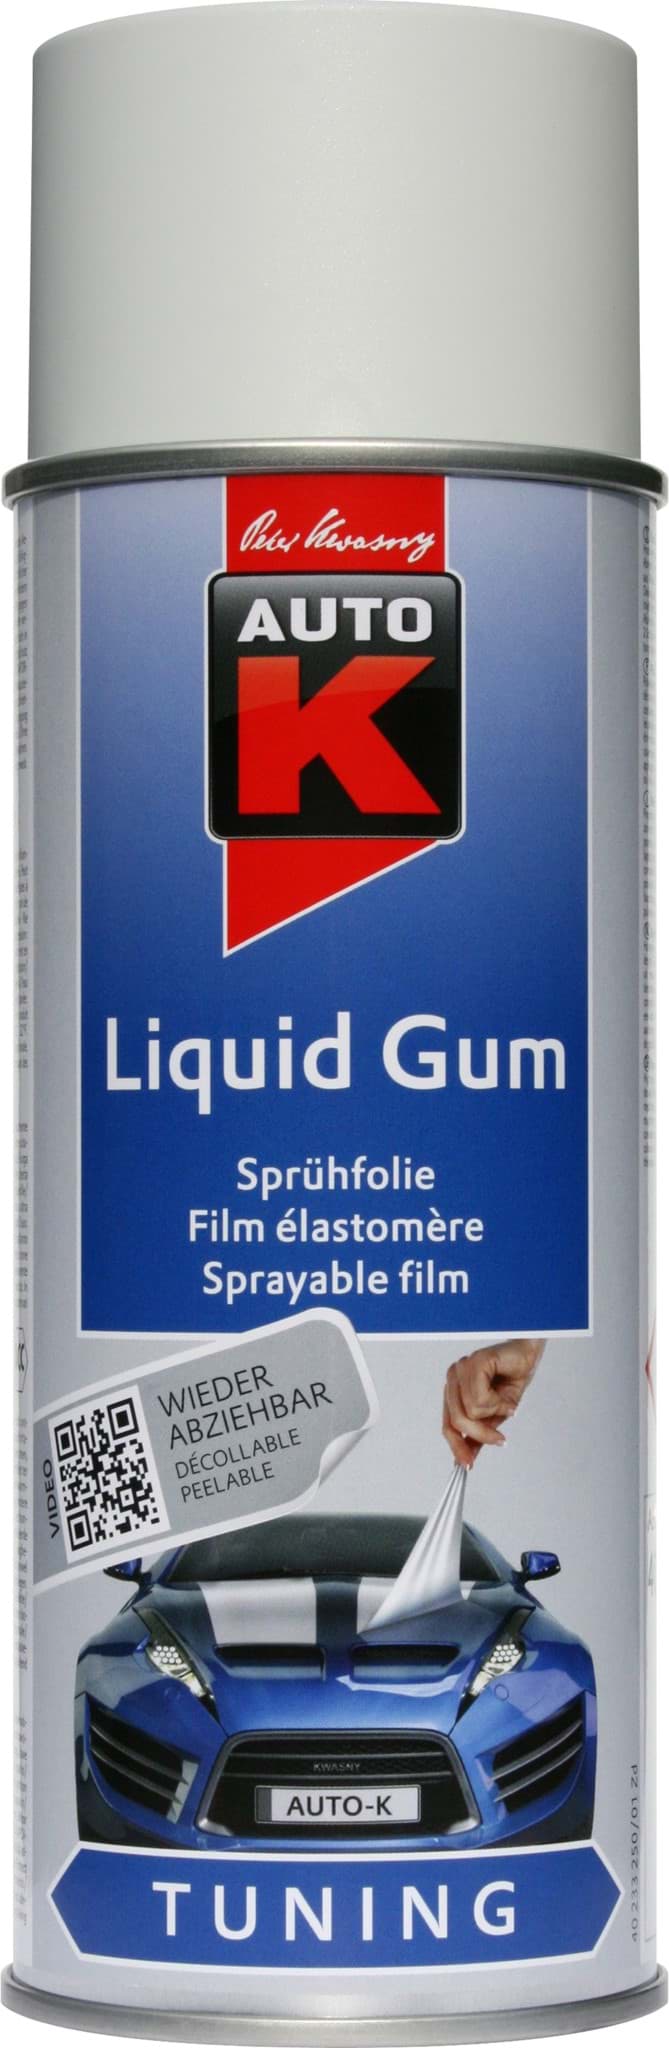 Picture of AutoK Liquid Gum Sprühfolie weiss matt 400ml Folienlack, Abziehlack, Felgenfolie, 233251